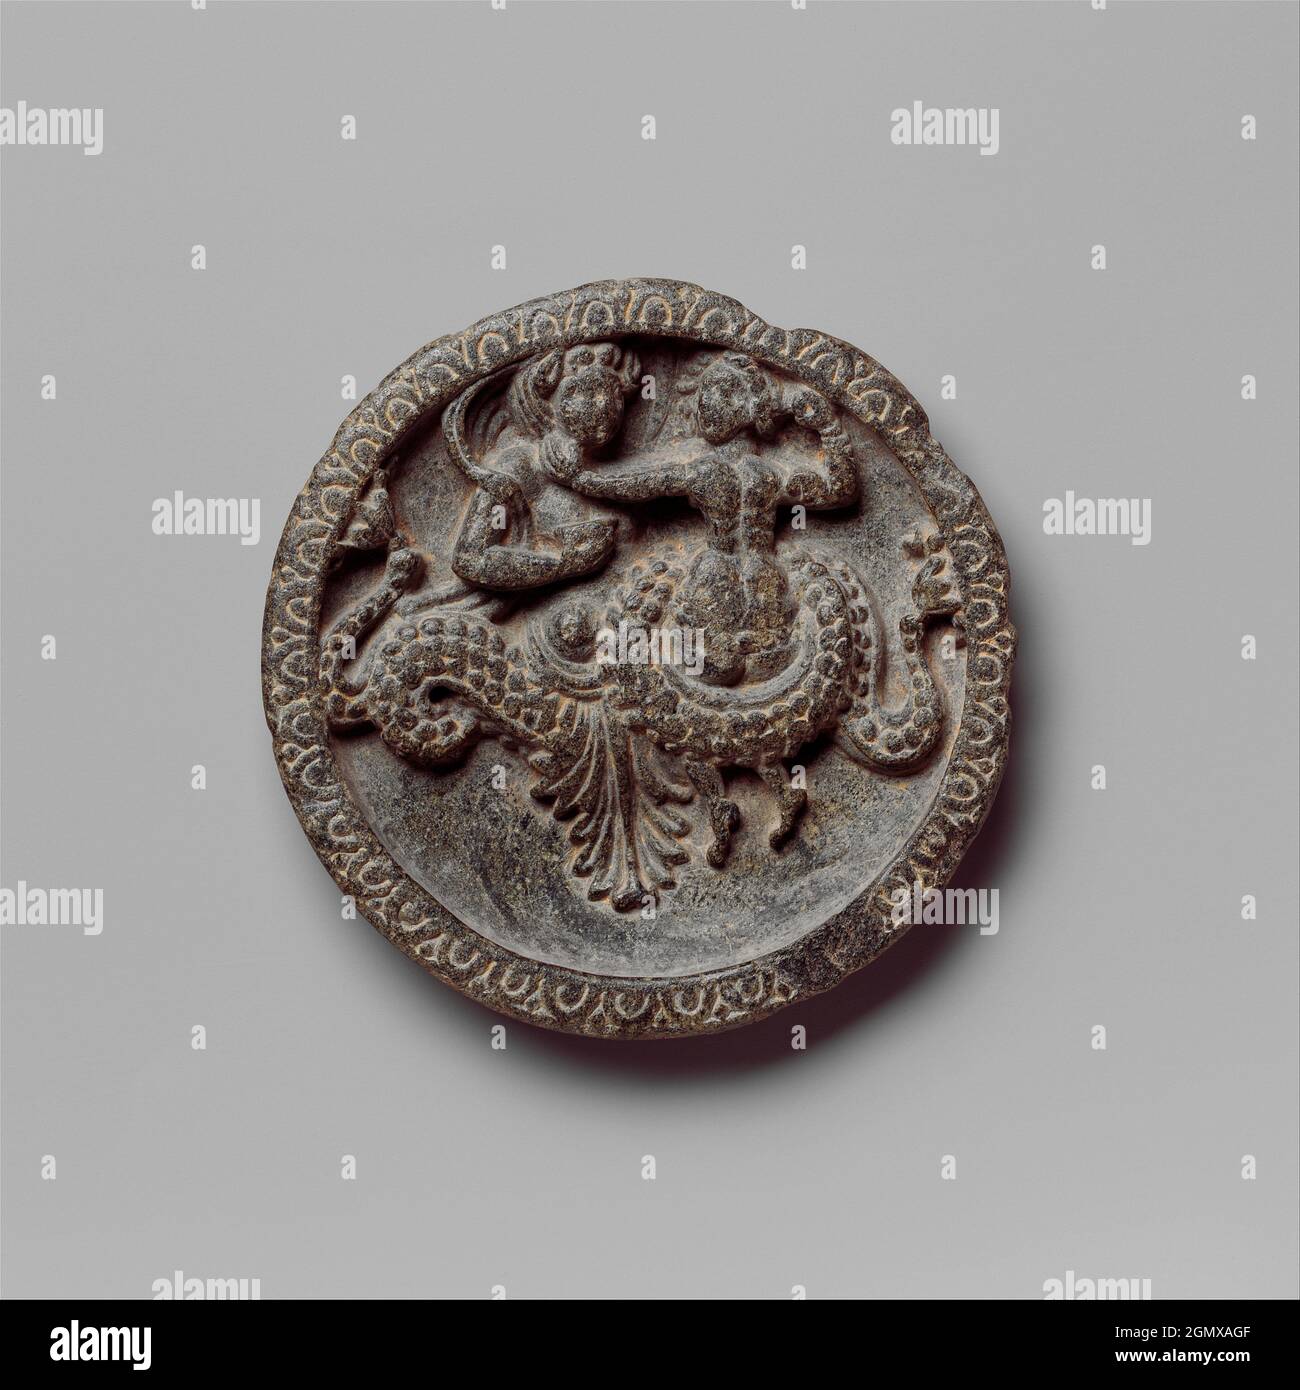 Dish with Marine Creature and Couple. Date: 1st century B.C; Culture: Pakistan (ancient region of Gandhara); Medium: Schist; Dimensions: Diam. 4 1/2 Stock Photo